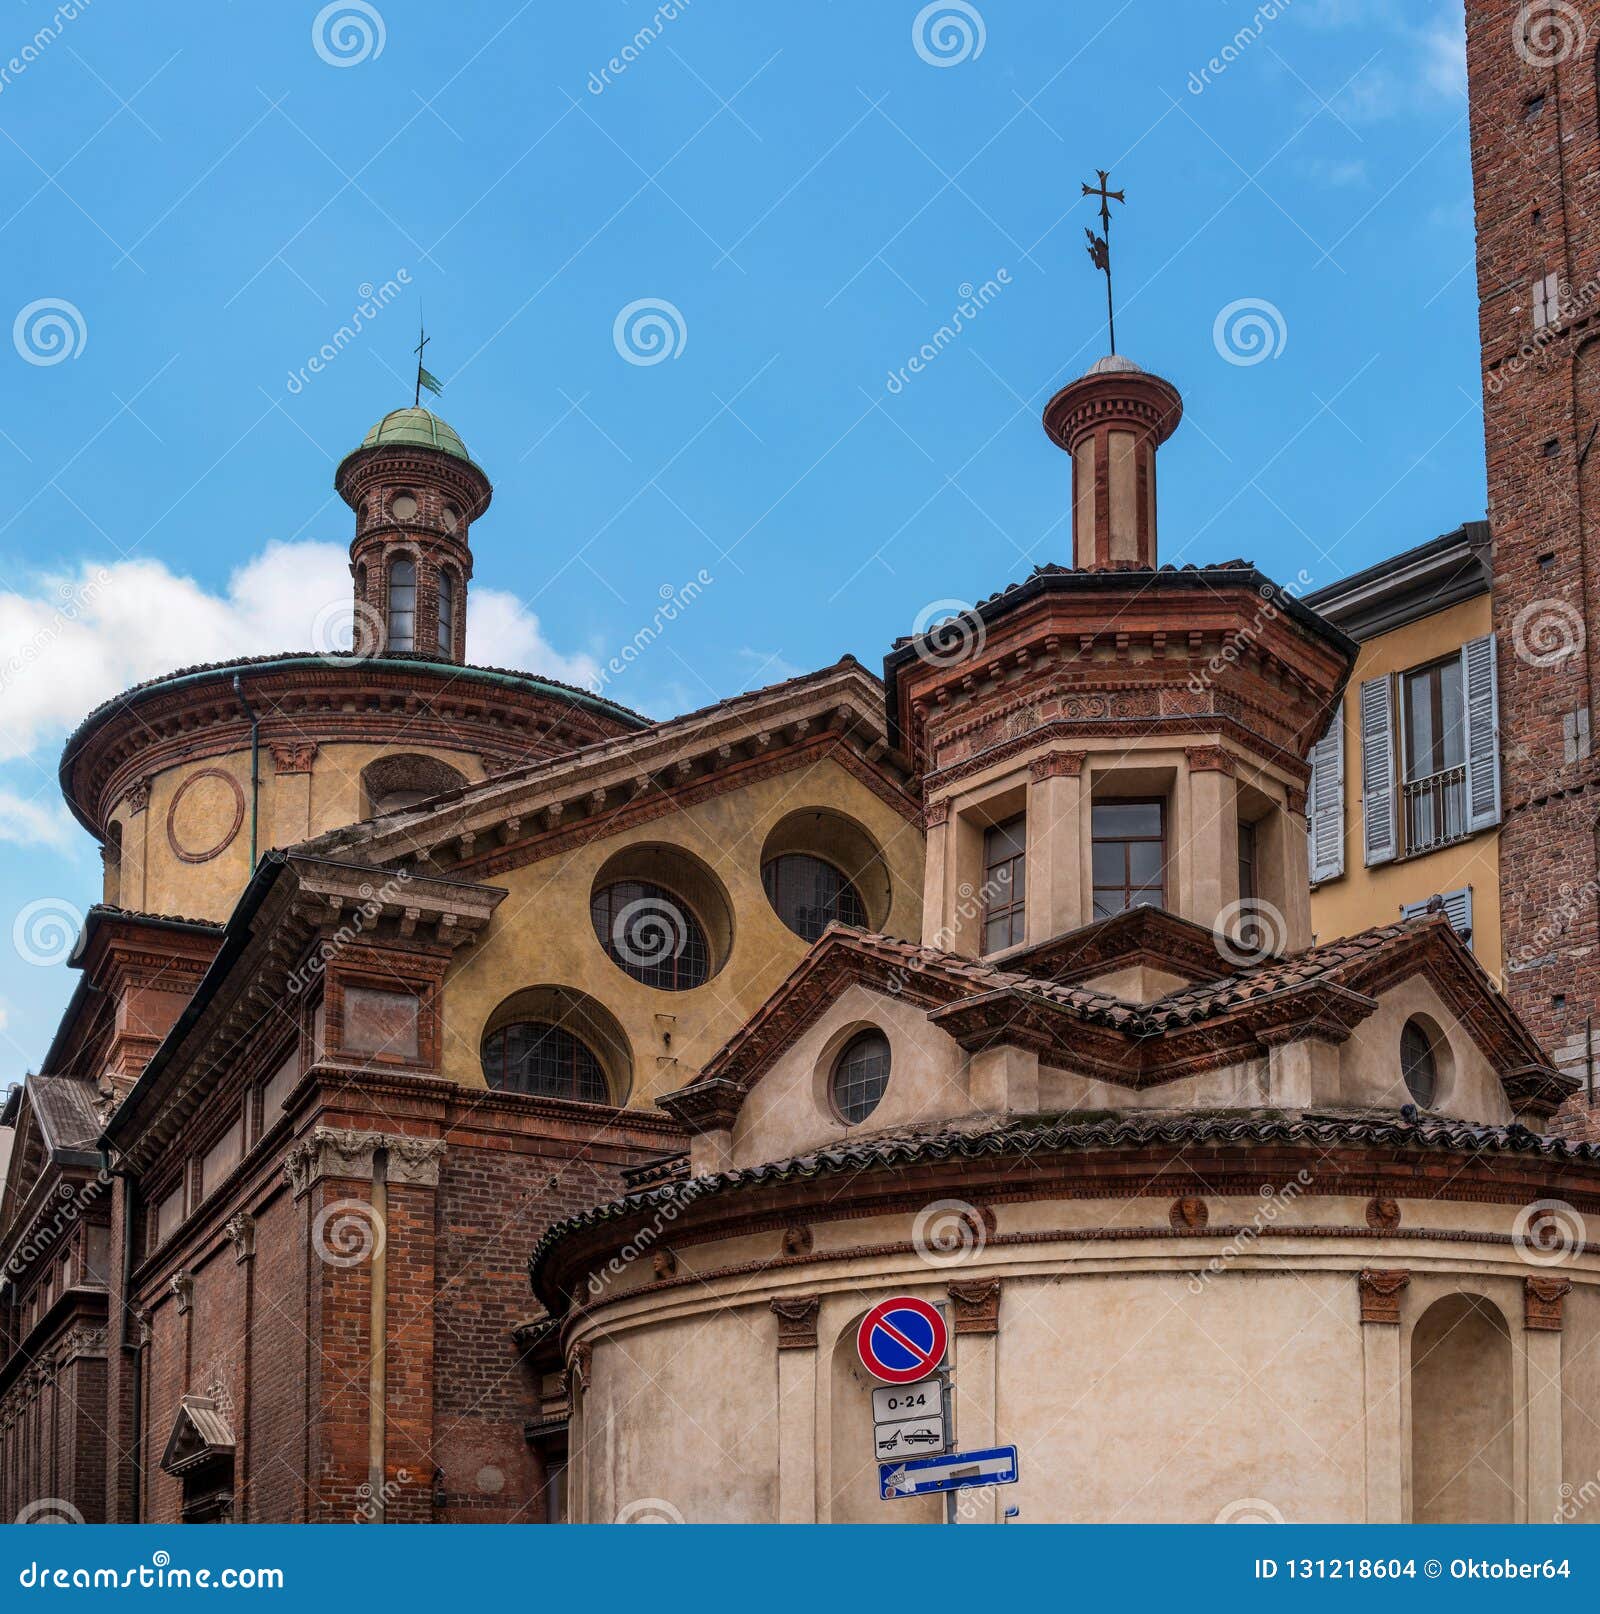 Church of Santa Maria Presso San Satiro. Milan. Italy. Architectural  Fragment Stock Photo - Image of great, italy: 131218604